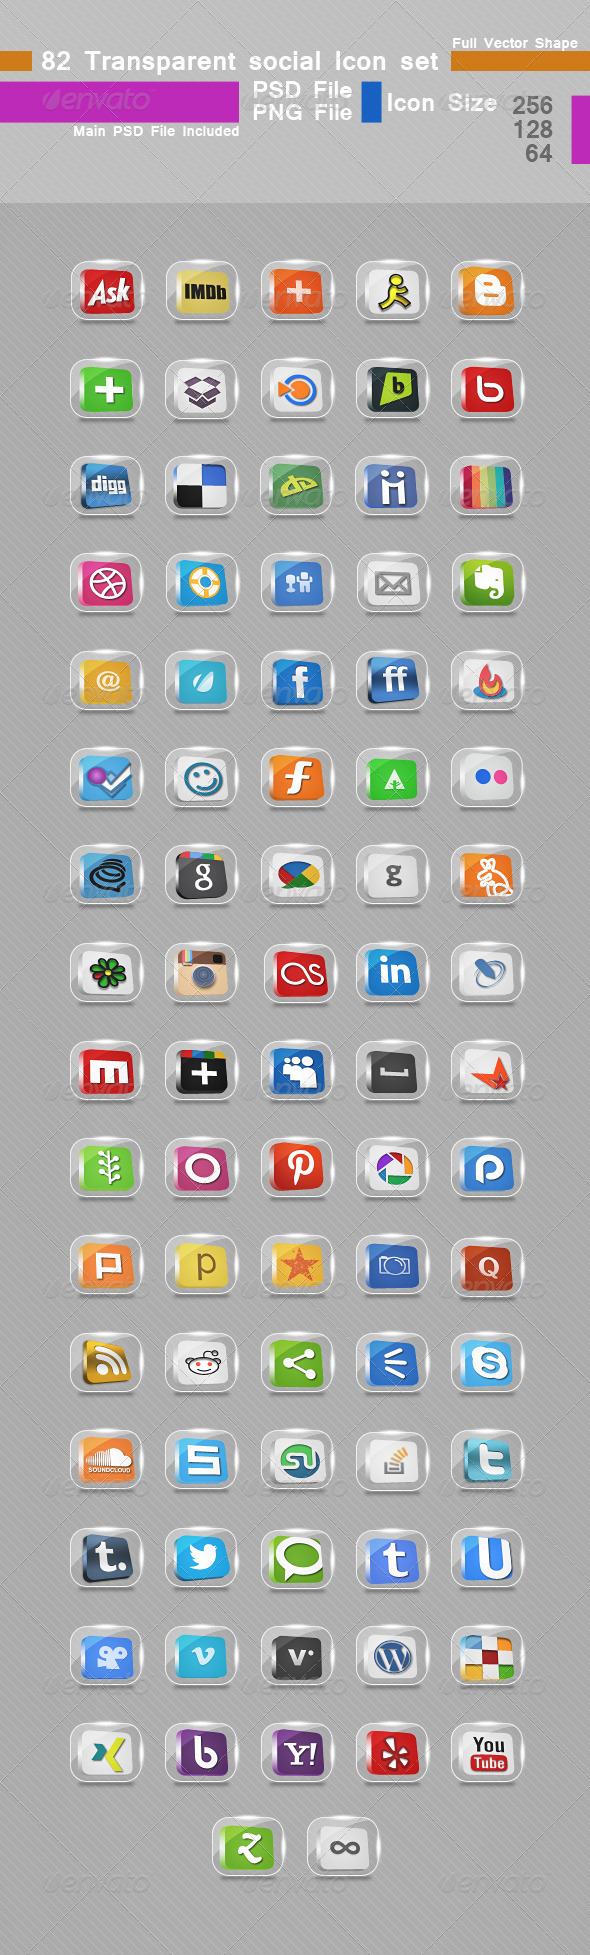 Transparent Social Media Icon Sets